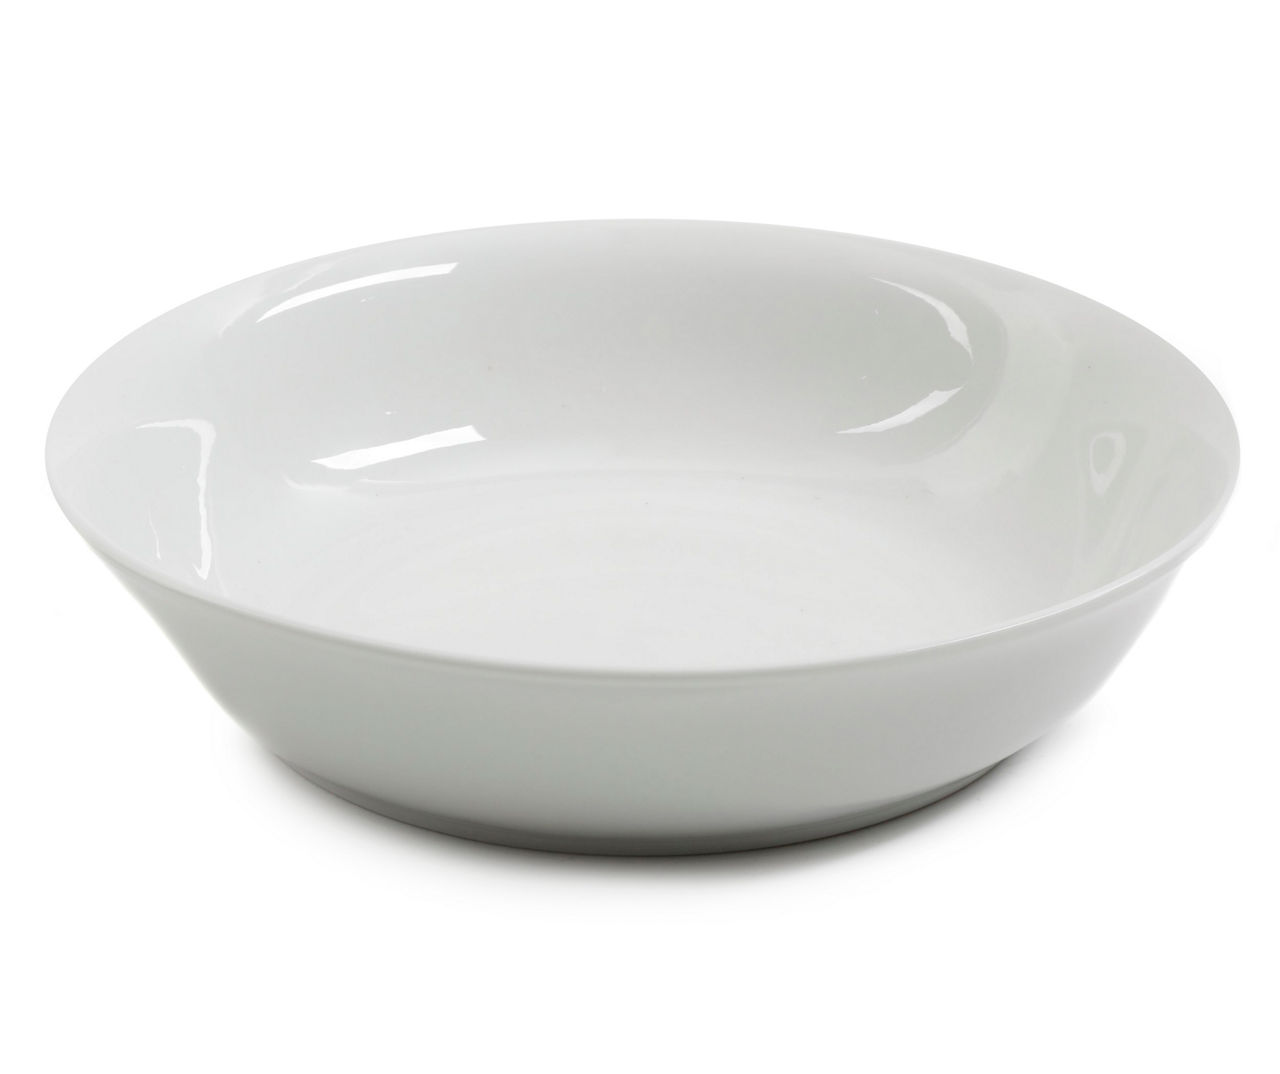 Staub Ceramic 2-pc Large Universal Bowl Set - White, 2-pc - Kroger